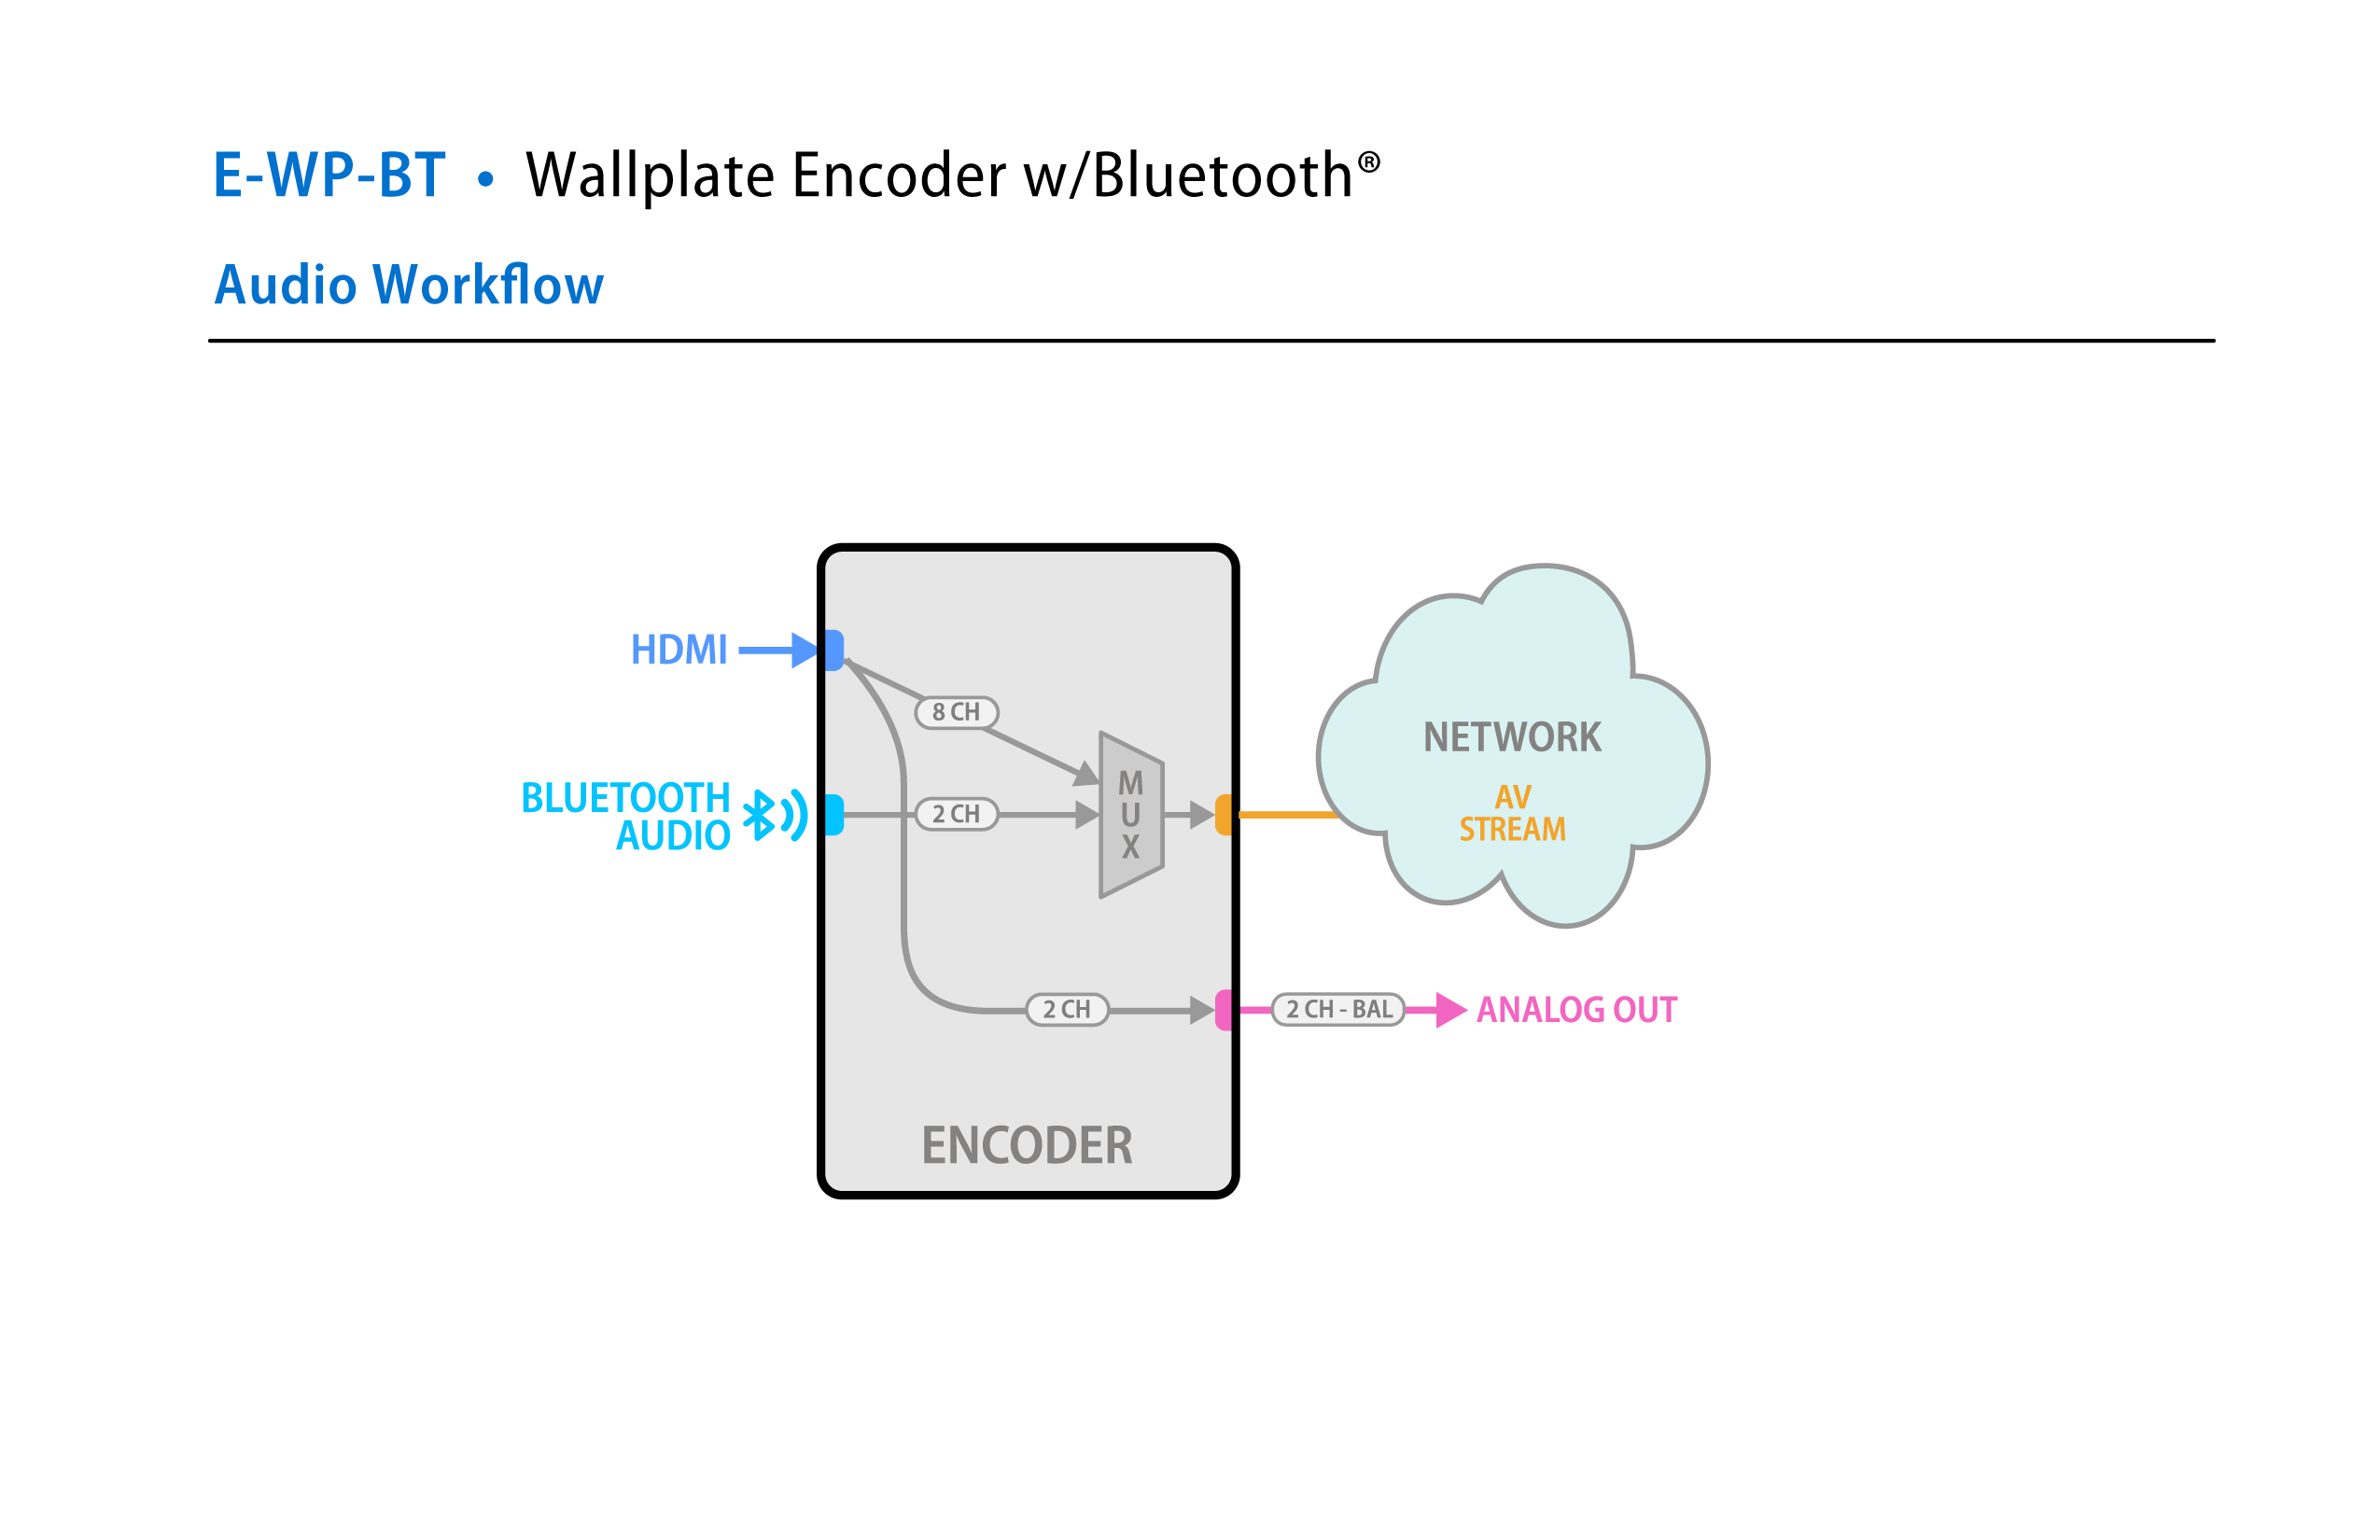 E-WP-BT Workflow